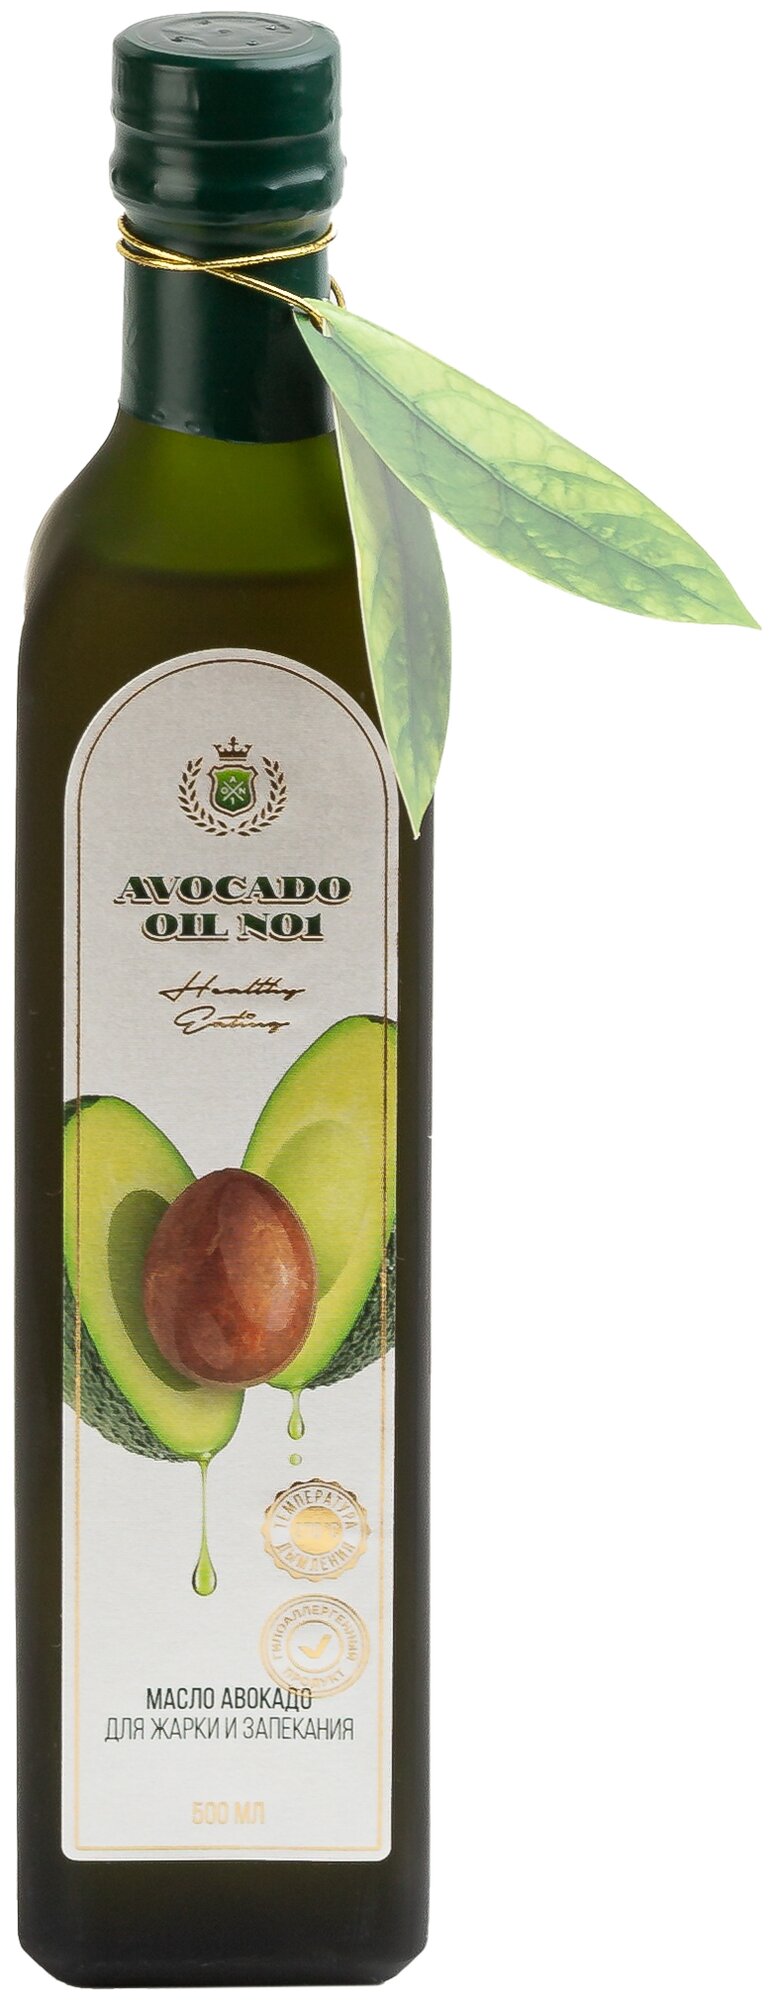 500 мл Avocado oiL №1 гипоаллергенное масло авокадо, ст/б